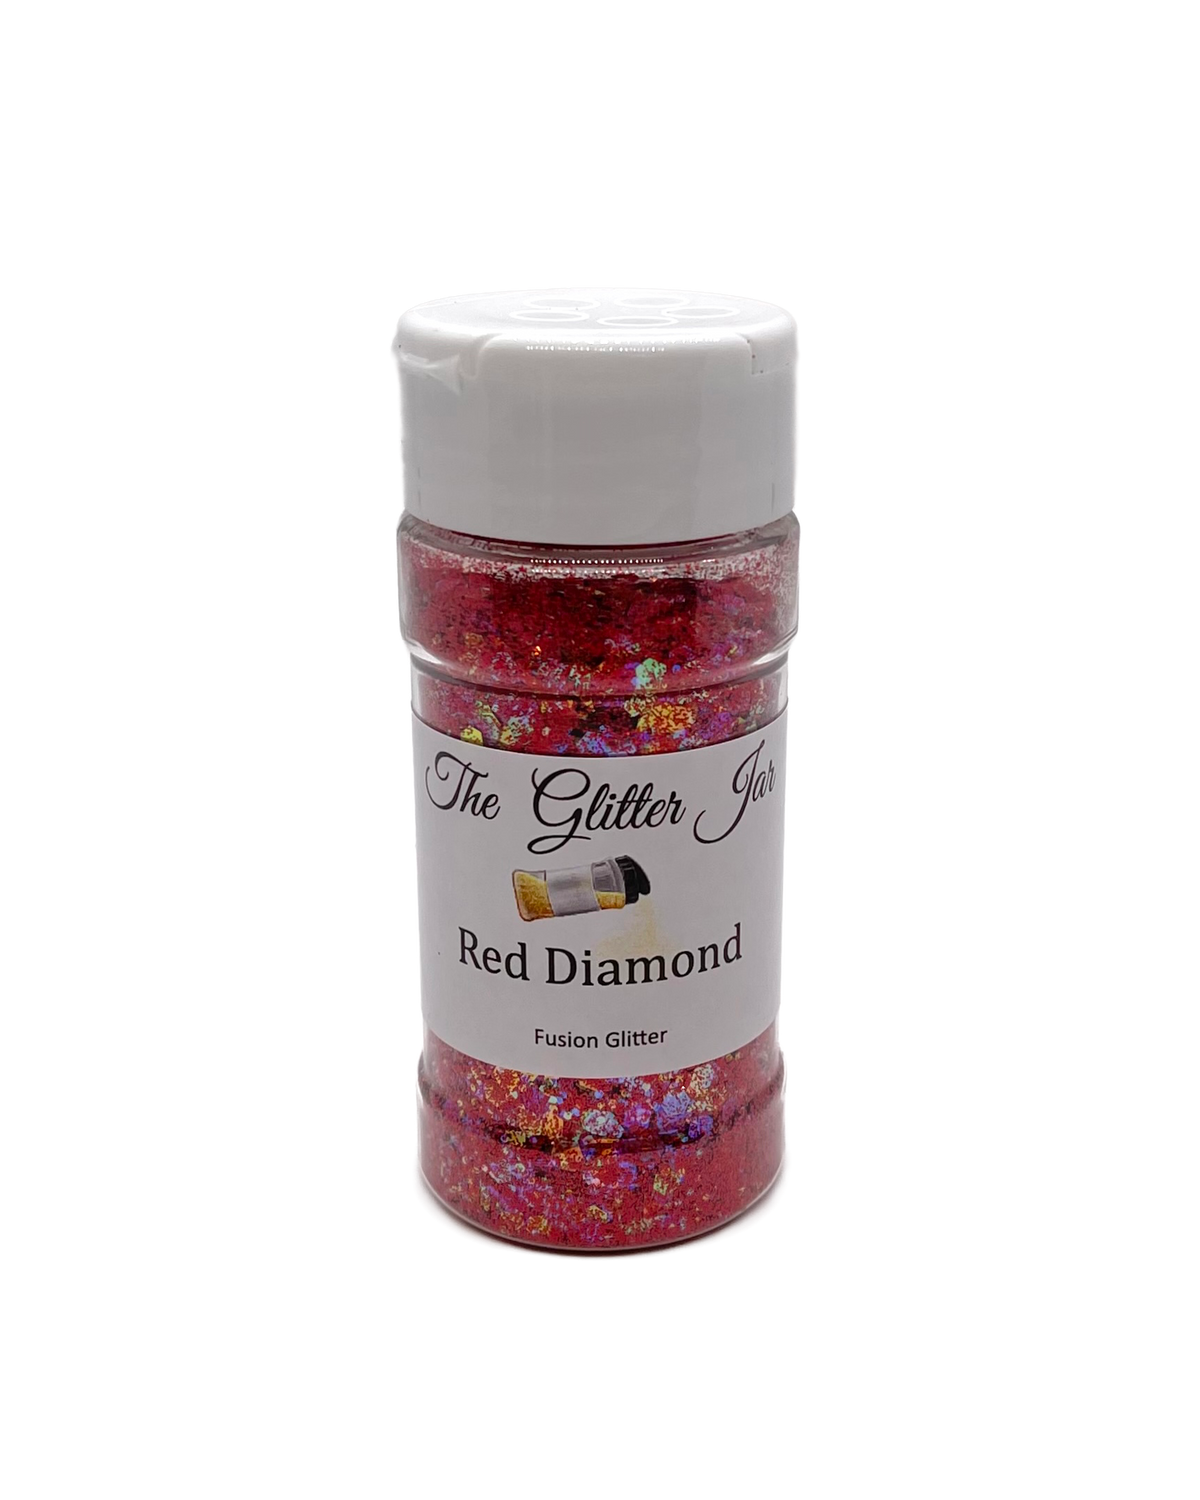 Red Diamond Fusion Glitter The Glitter Jar